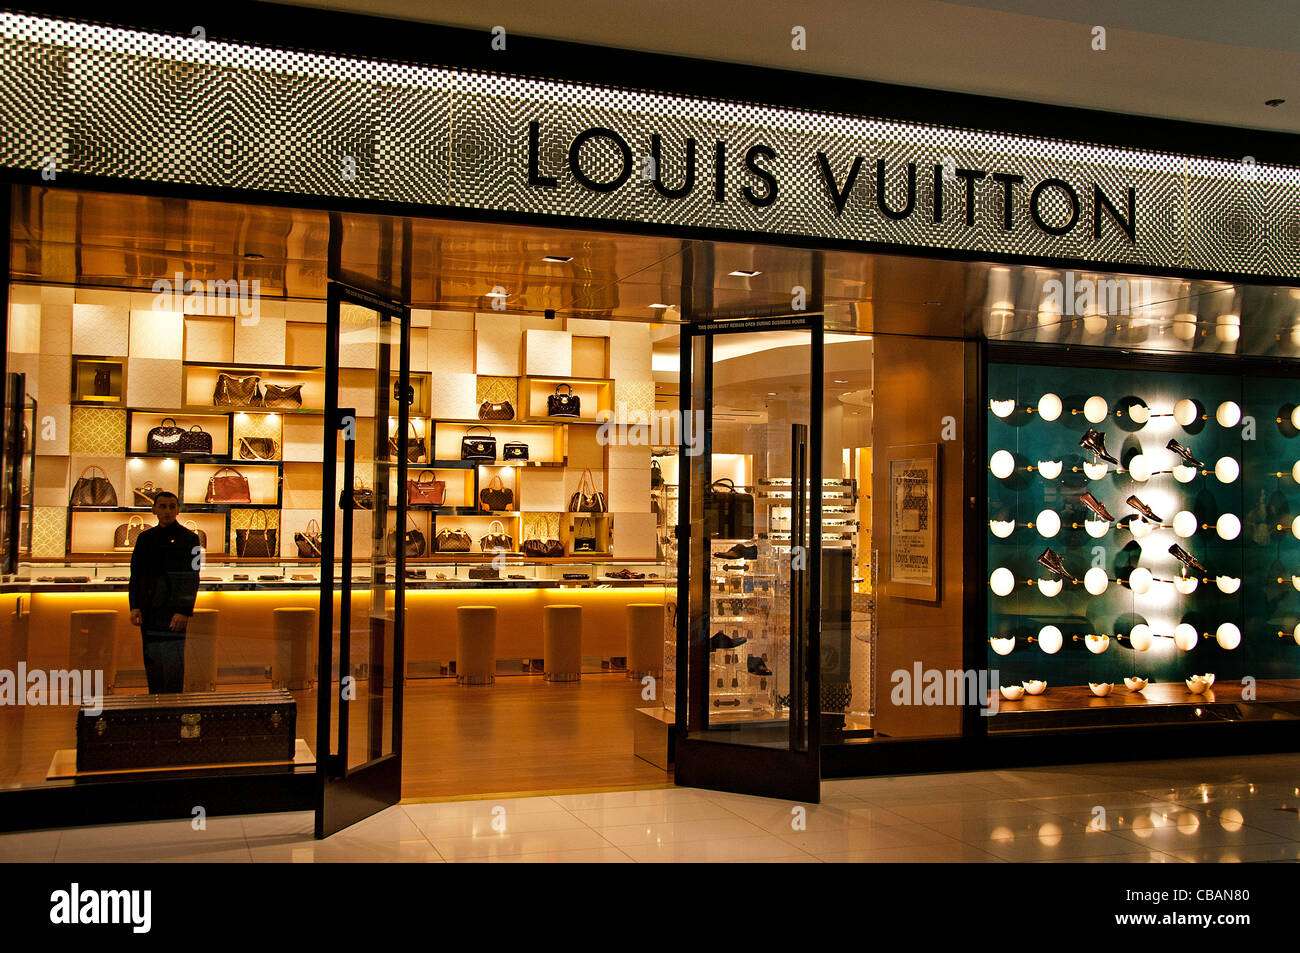 Marketing Monday (Louis Vuitton)